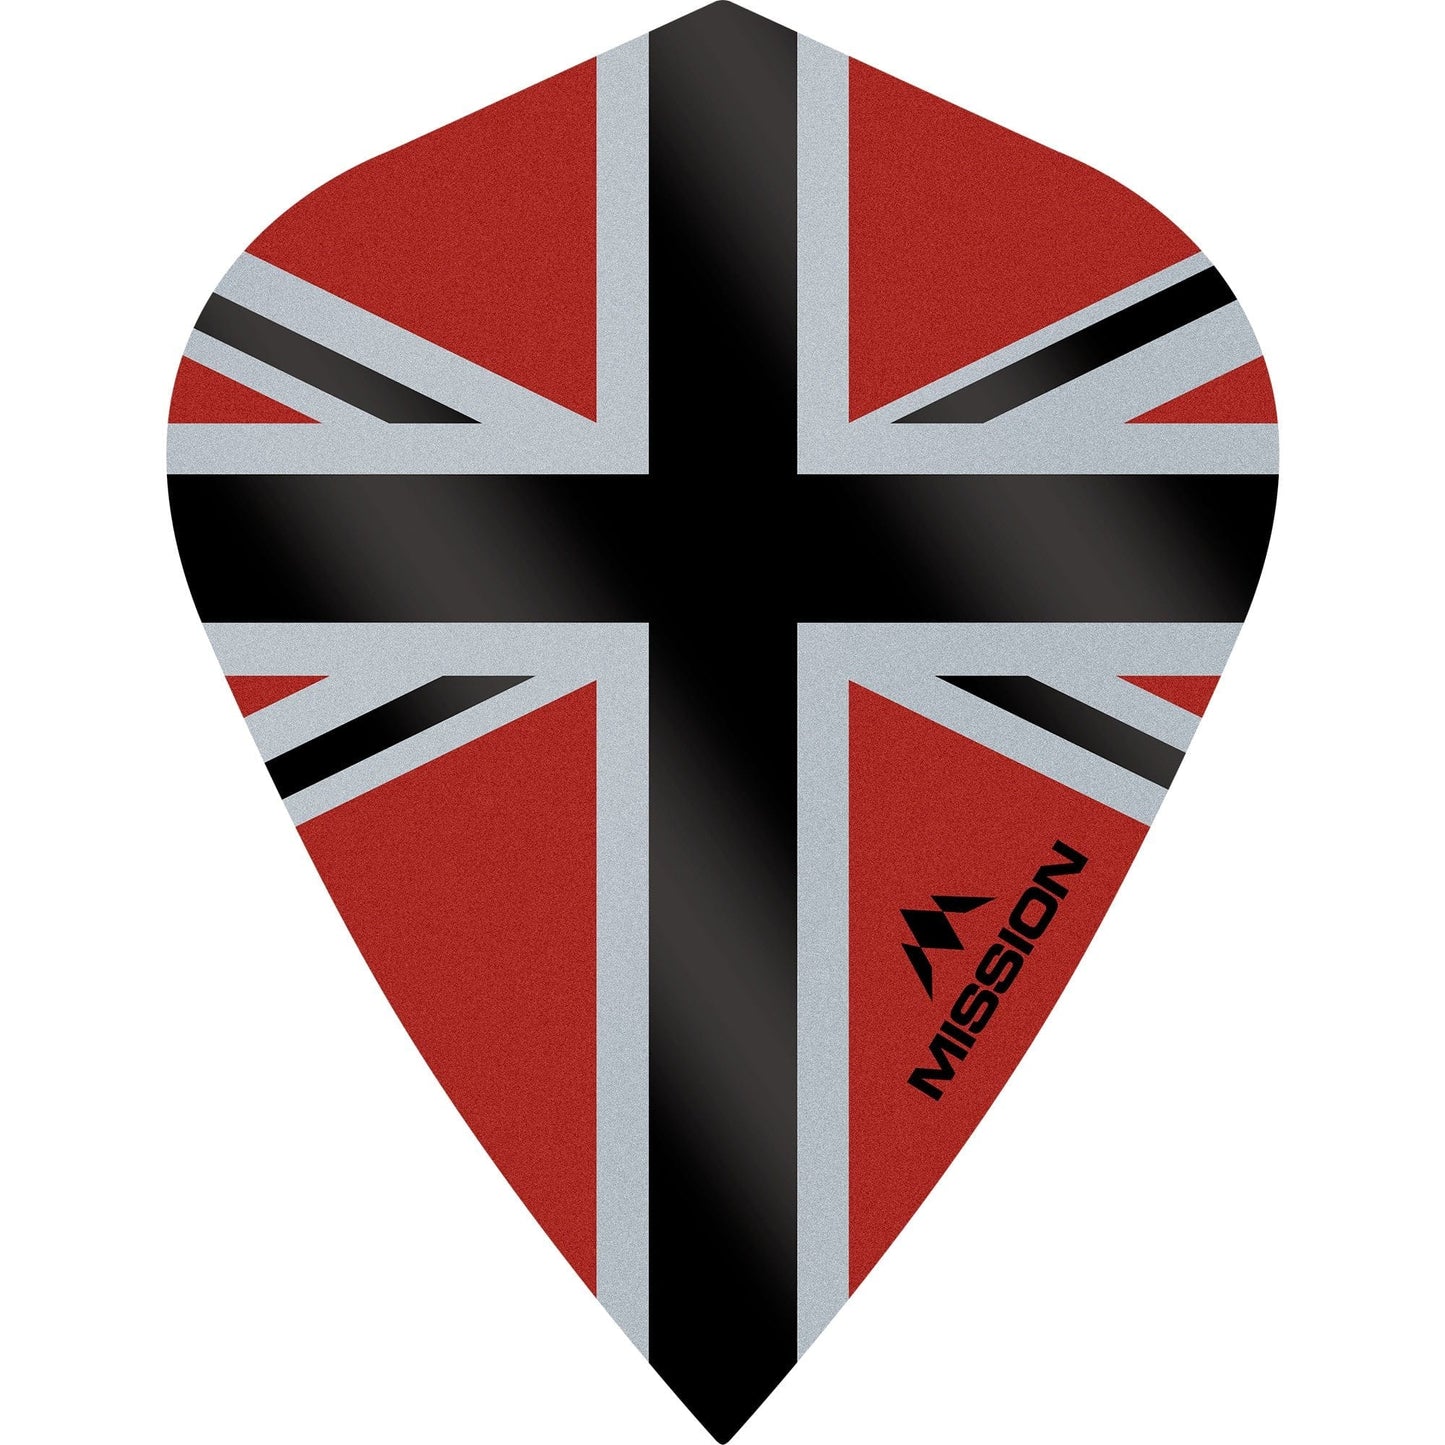 *Mission Alliance-X Union Jack Dart Flights - Kite Red Black